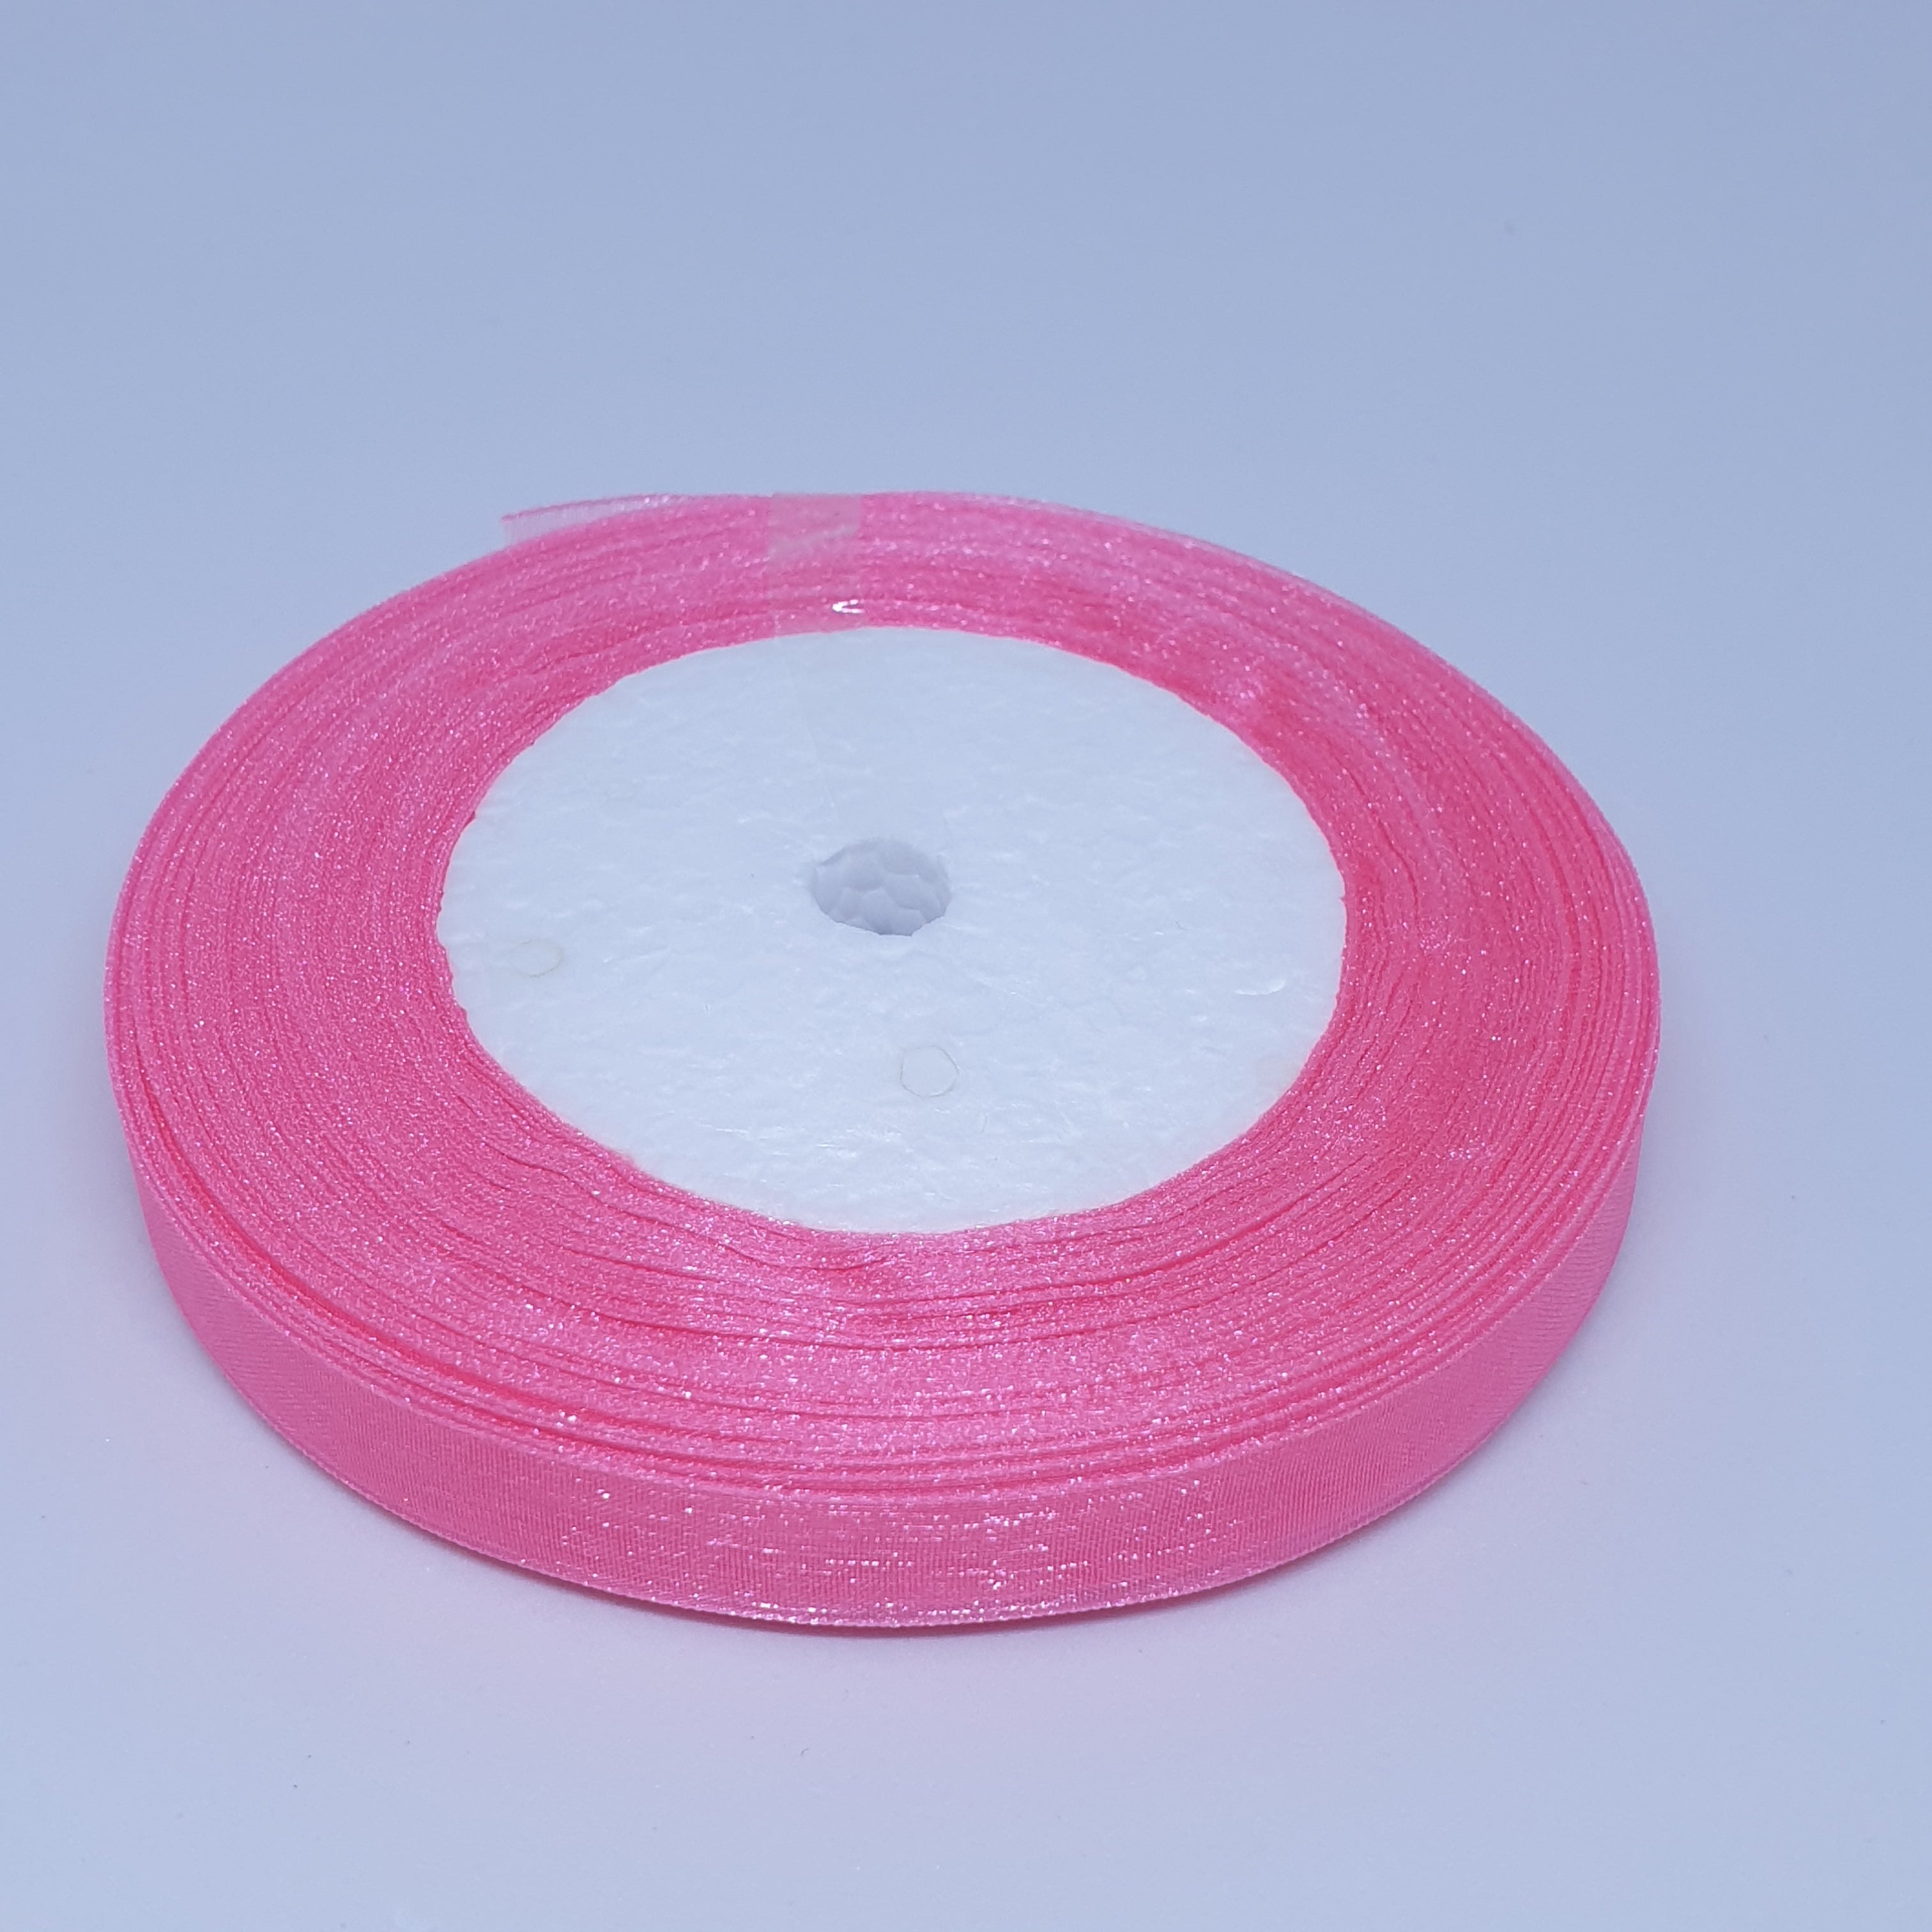 MajorCrafts 10mm 45metres Rose Pink Sheer Organza Fabric Ribbon Roll R169